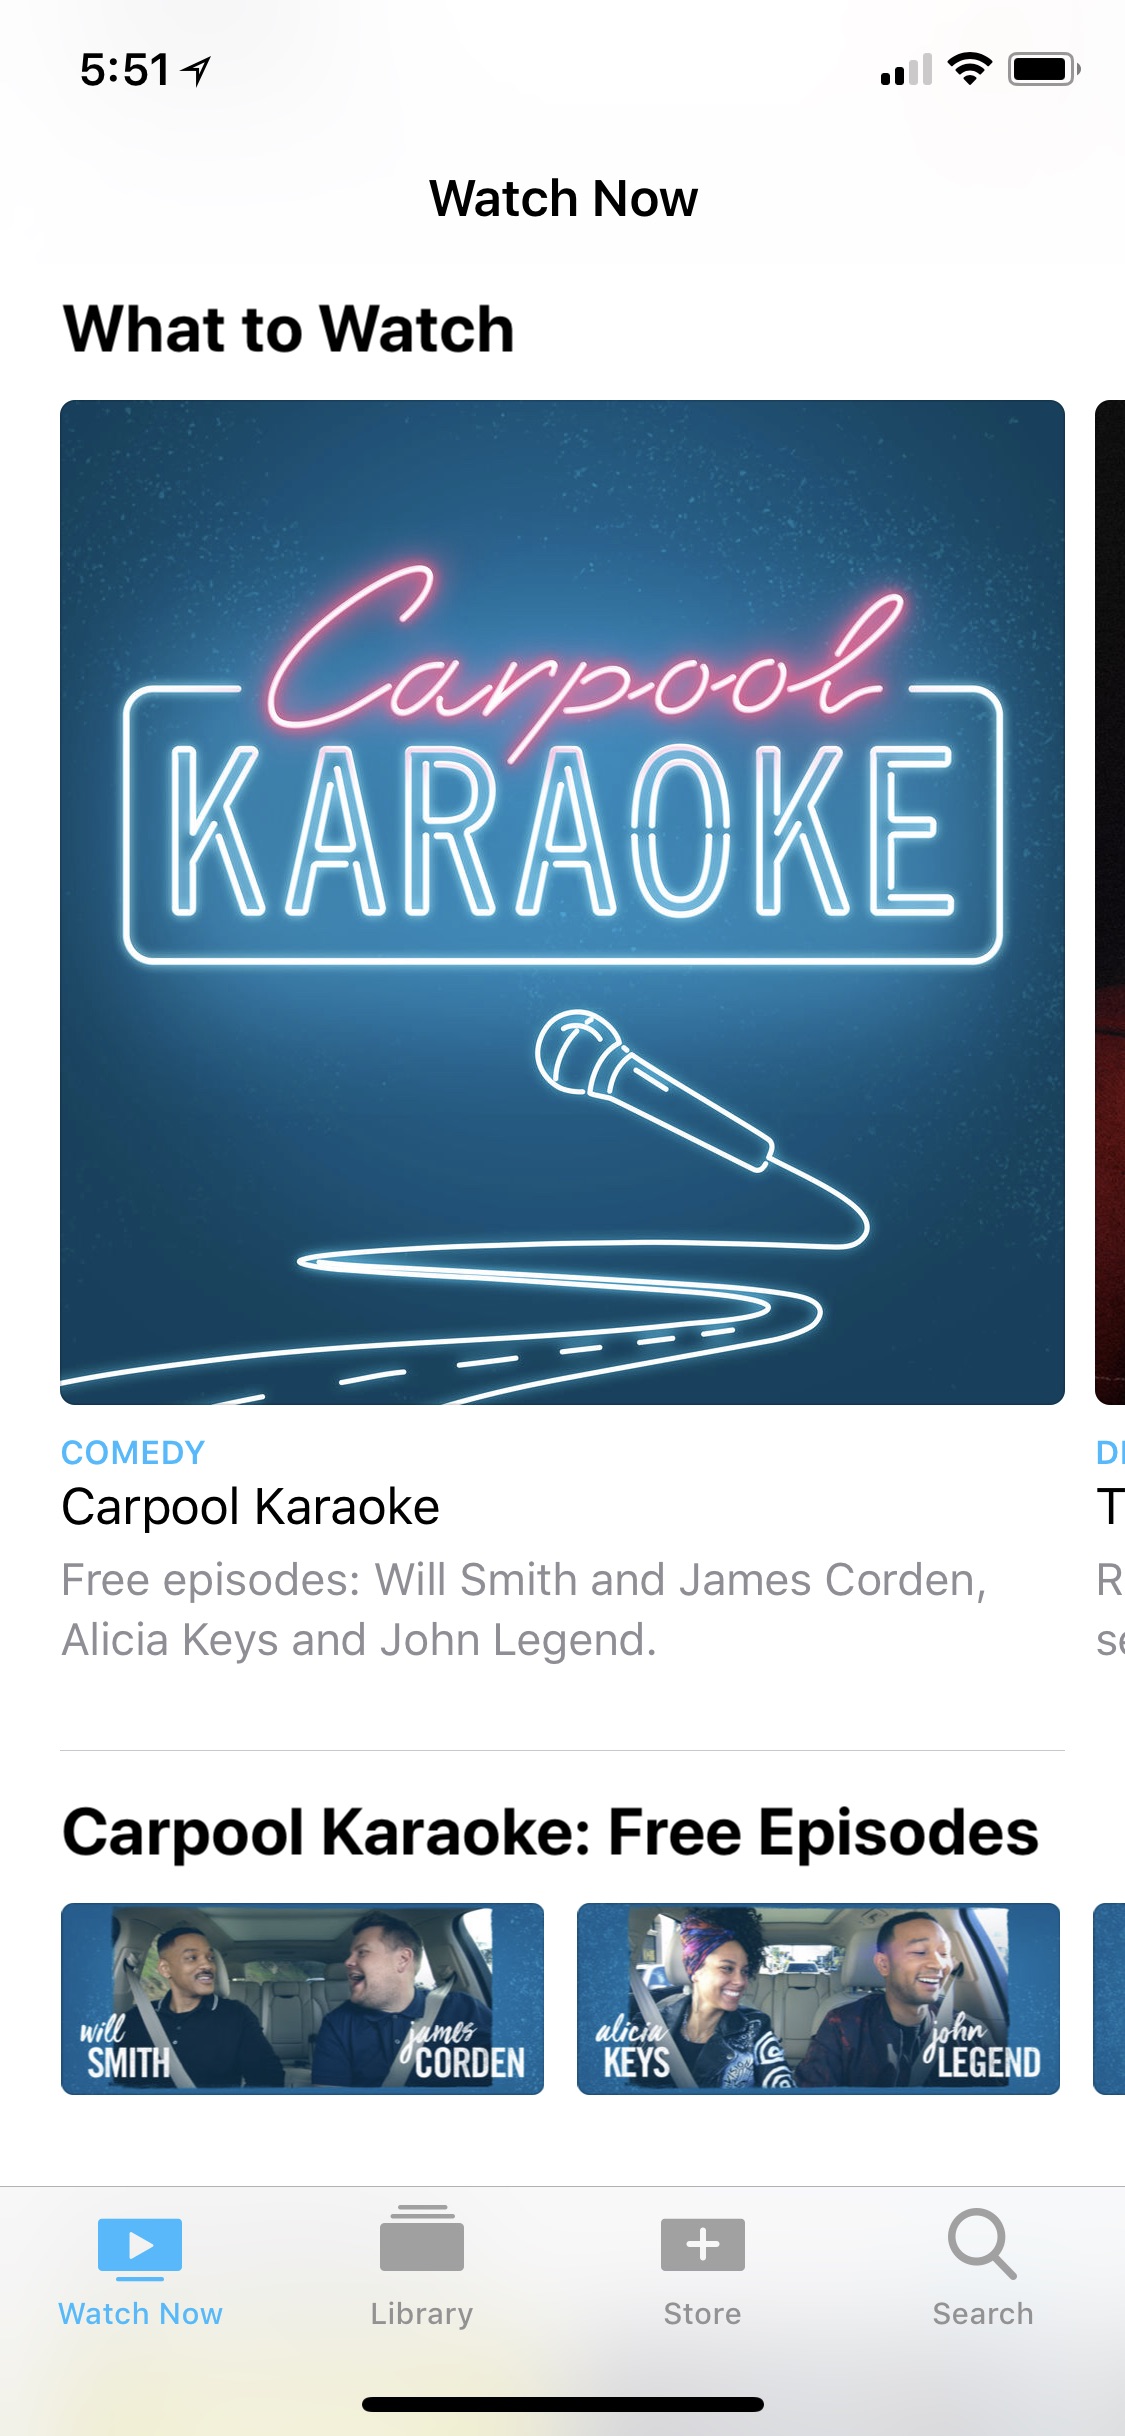 Apple to Stream Carpool Karaoke Series Free on the TV App [Video]